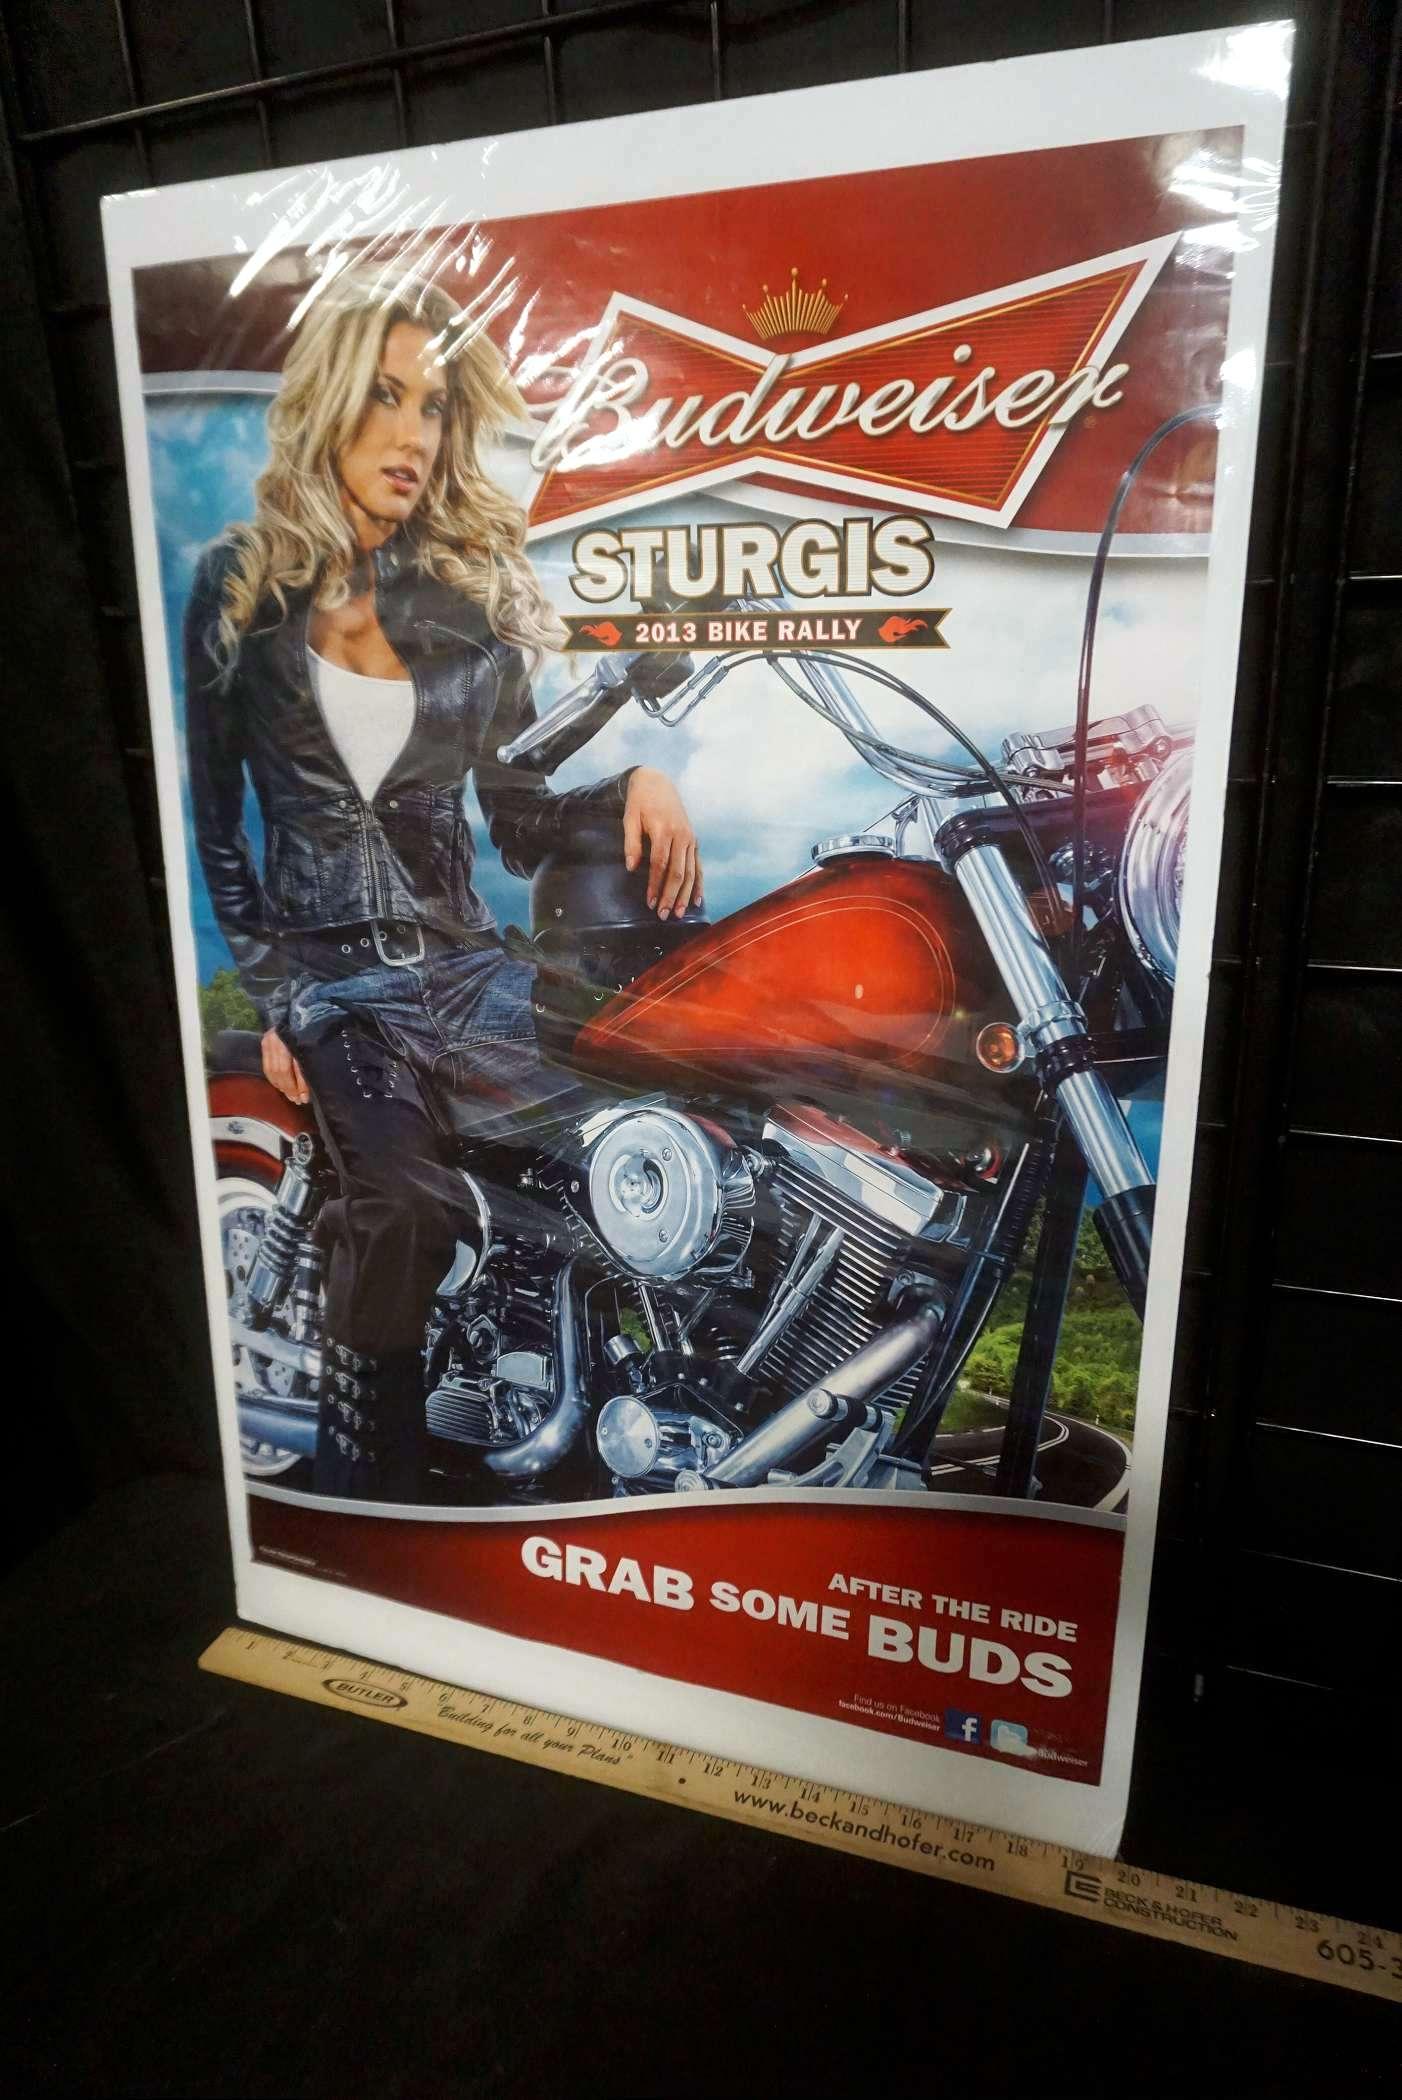 Budweiser Sturgis 2013 Bike Rally Poster